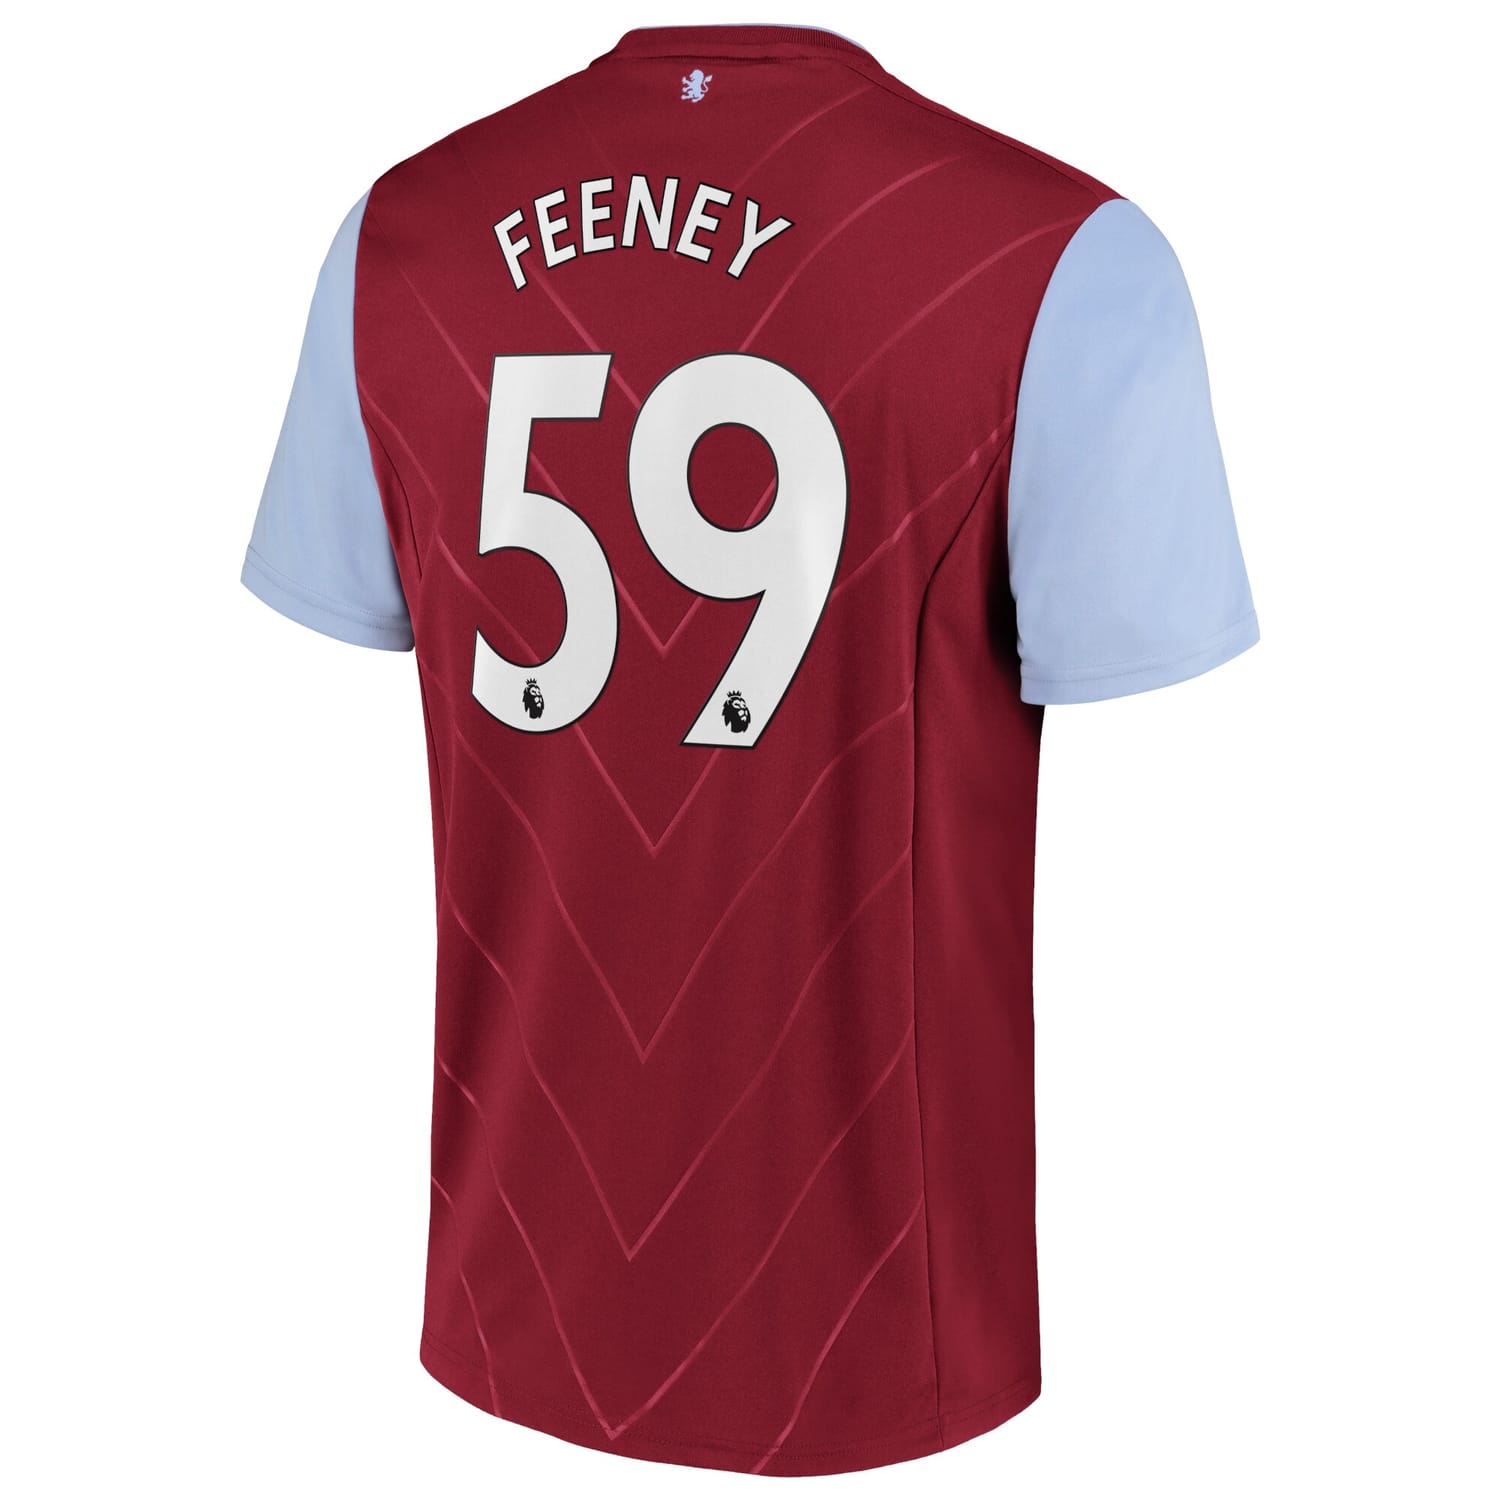 Premier League Aston Villa Home Jersey Shirt 2022-23 player Joshua Feeney 59 printing for Men